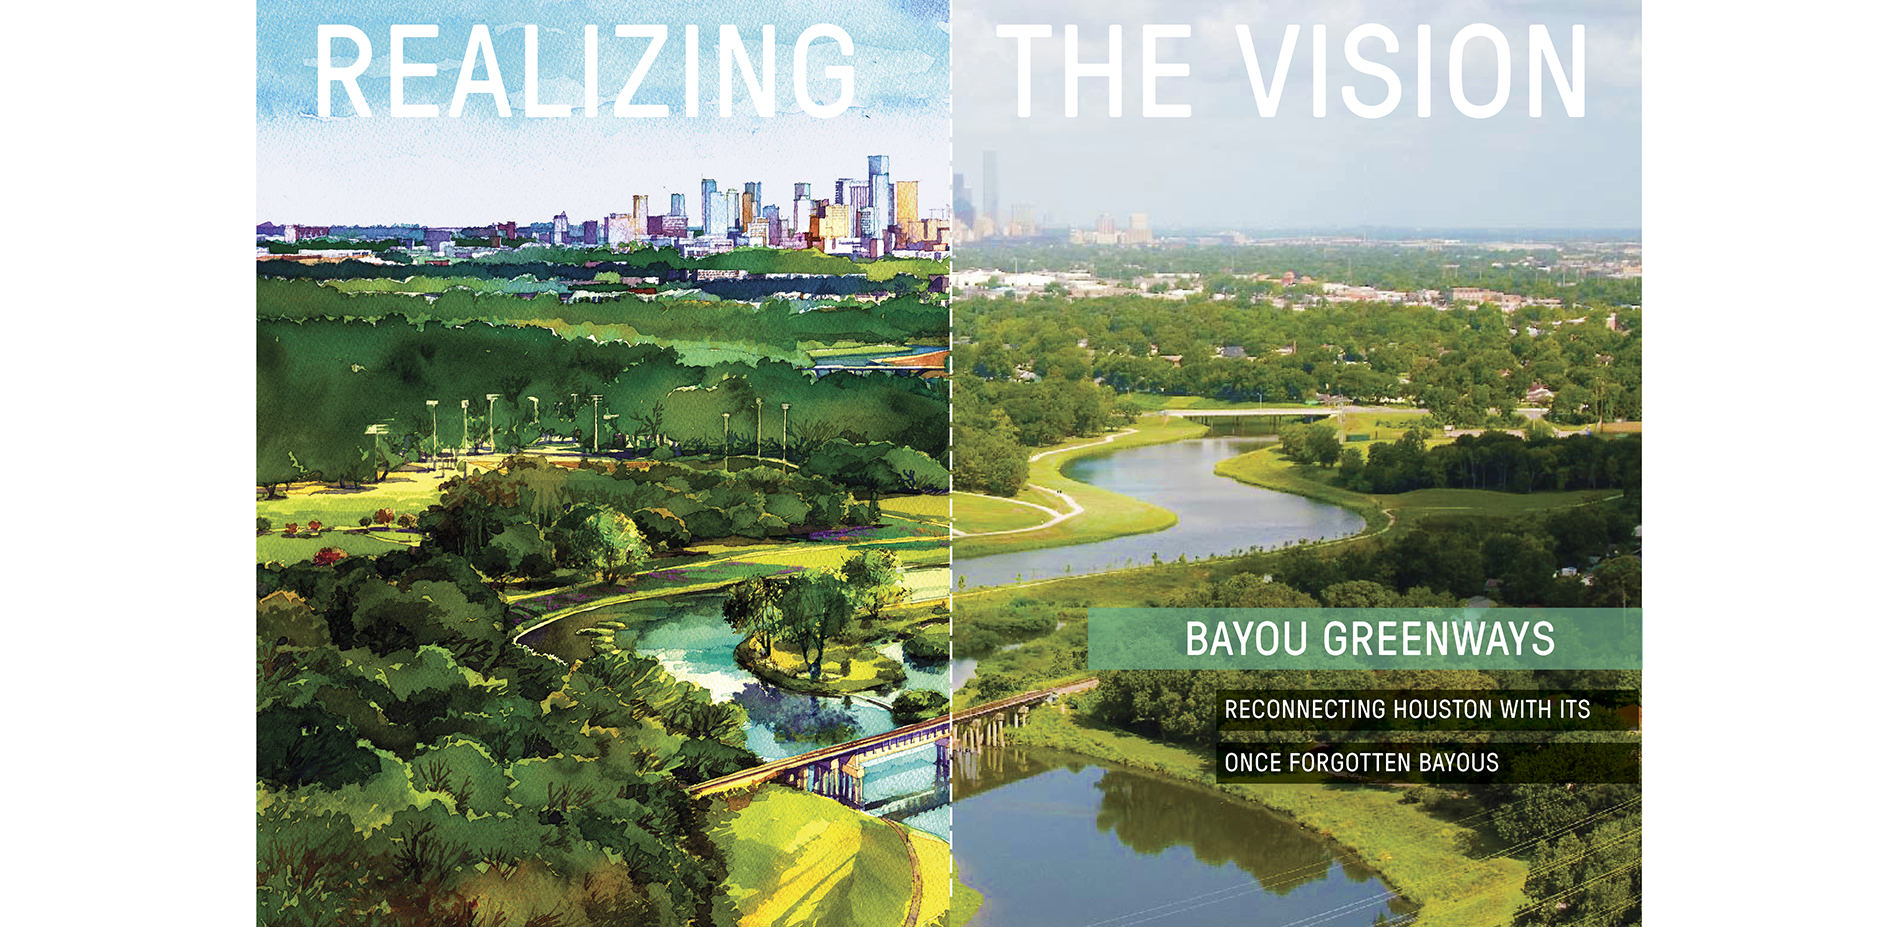 Bayou Greenways Illustration and Location Image